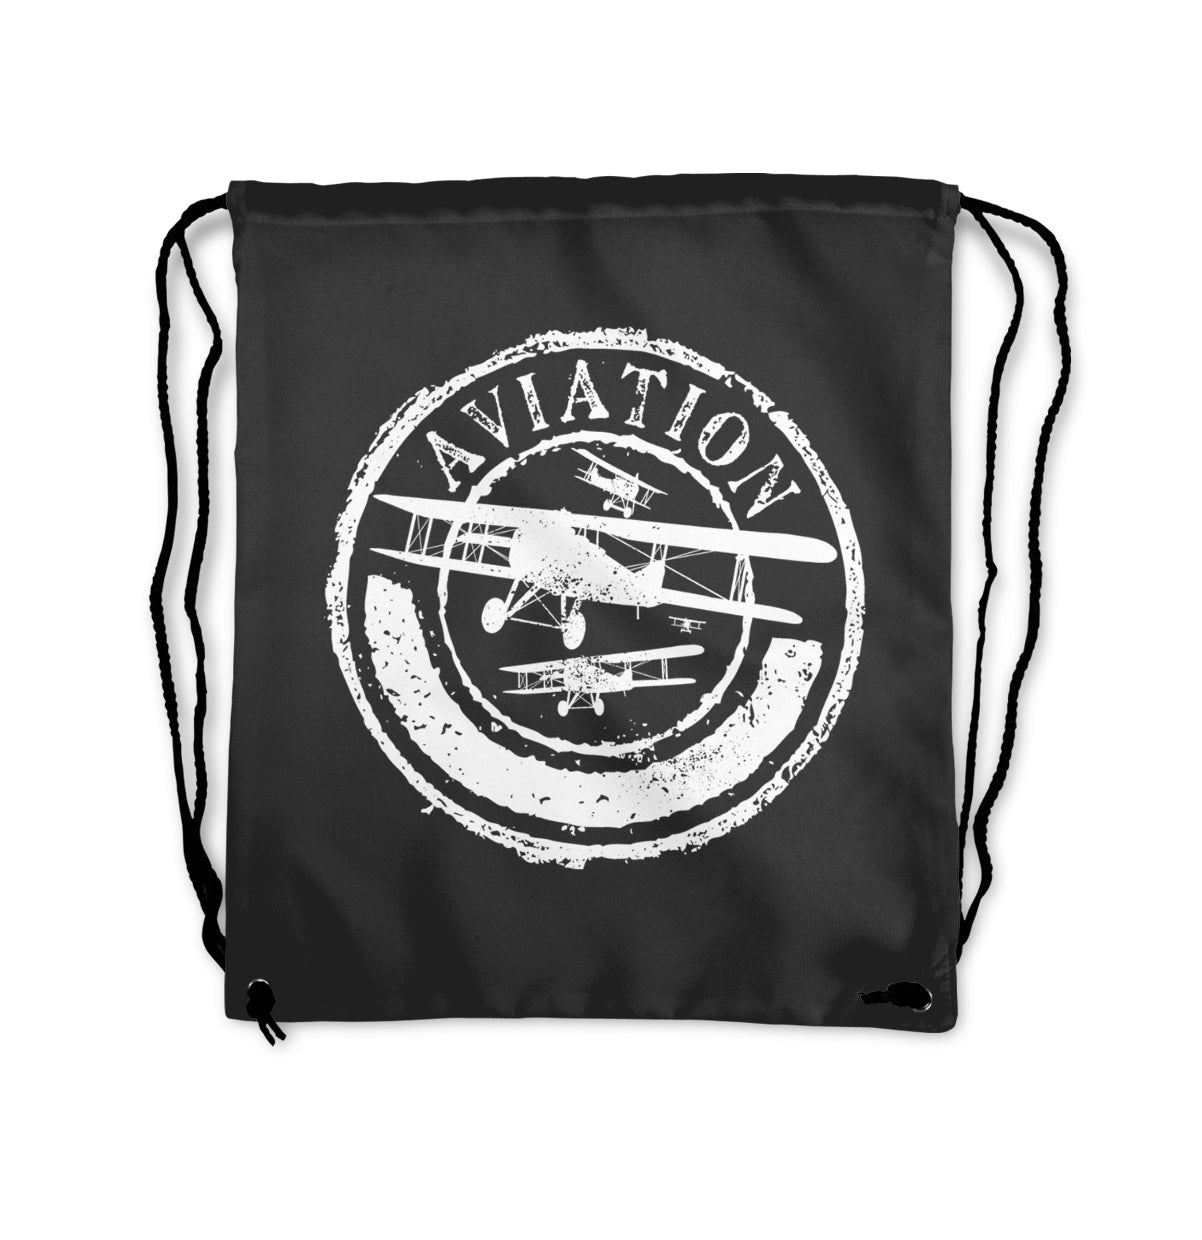 Aviation Lovers Designed Drawstring Bags